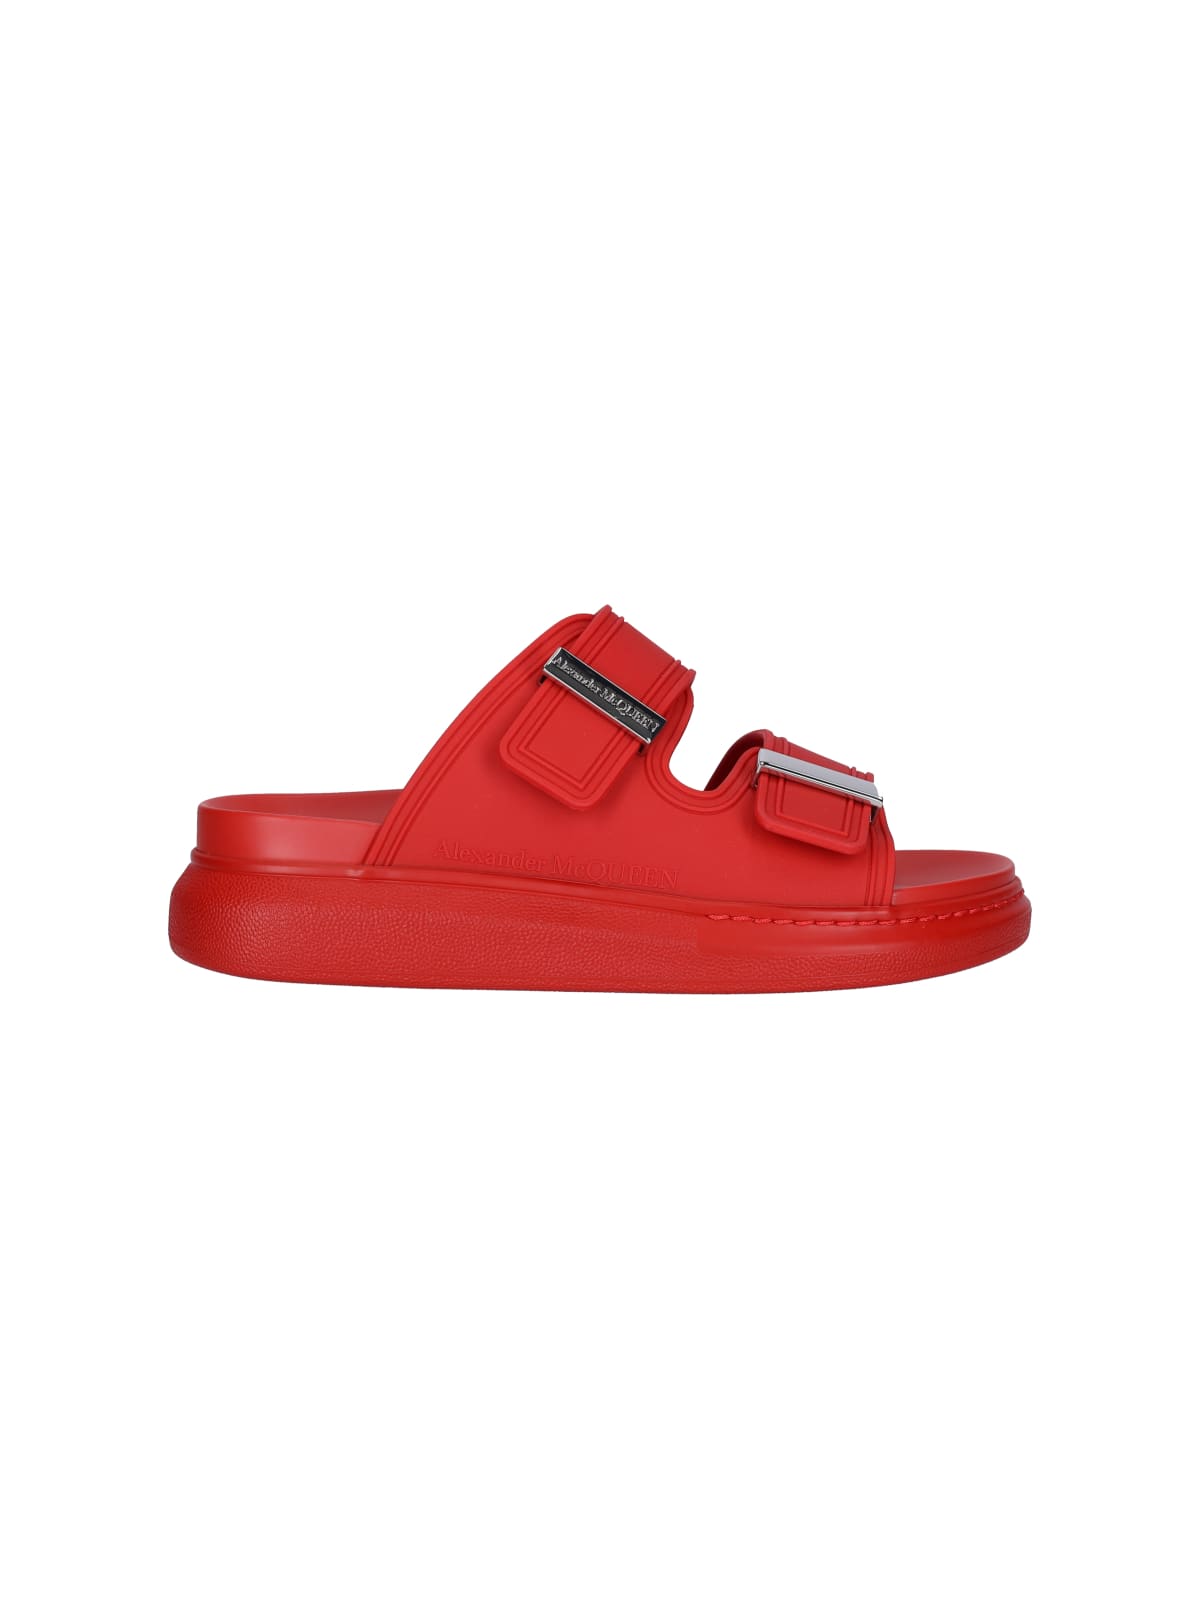 Alexander Mcqueen Flat Shoes Red